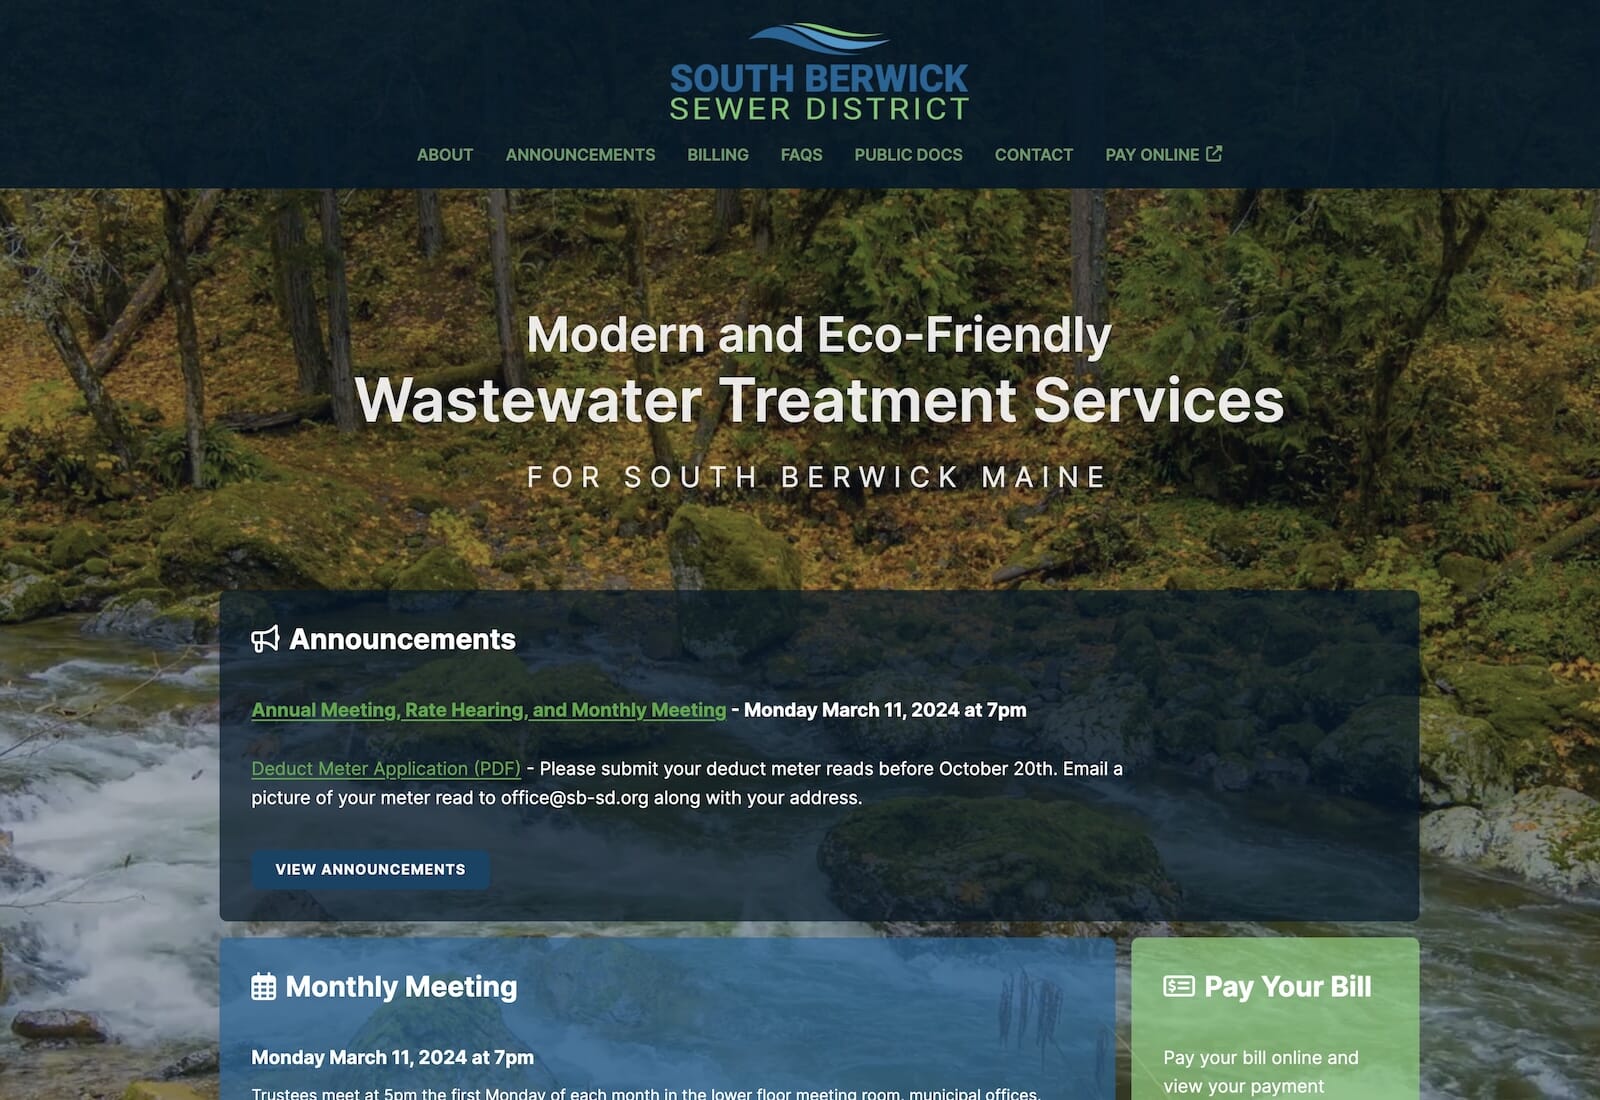 South Berwick Sewer District website screenshot